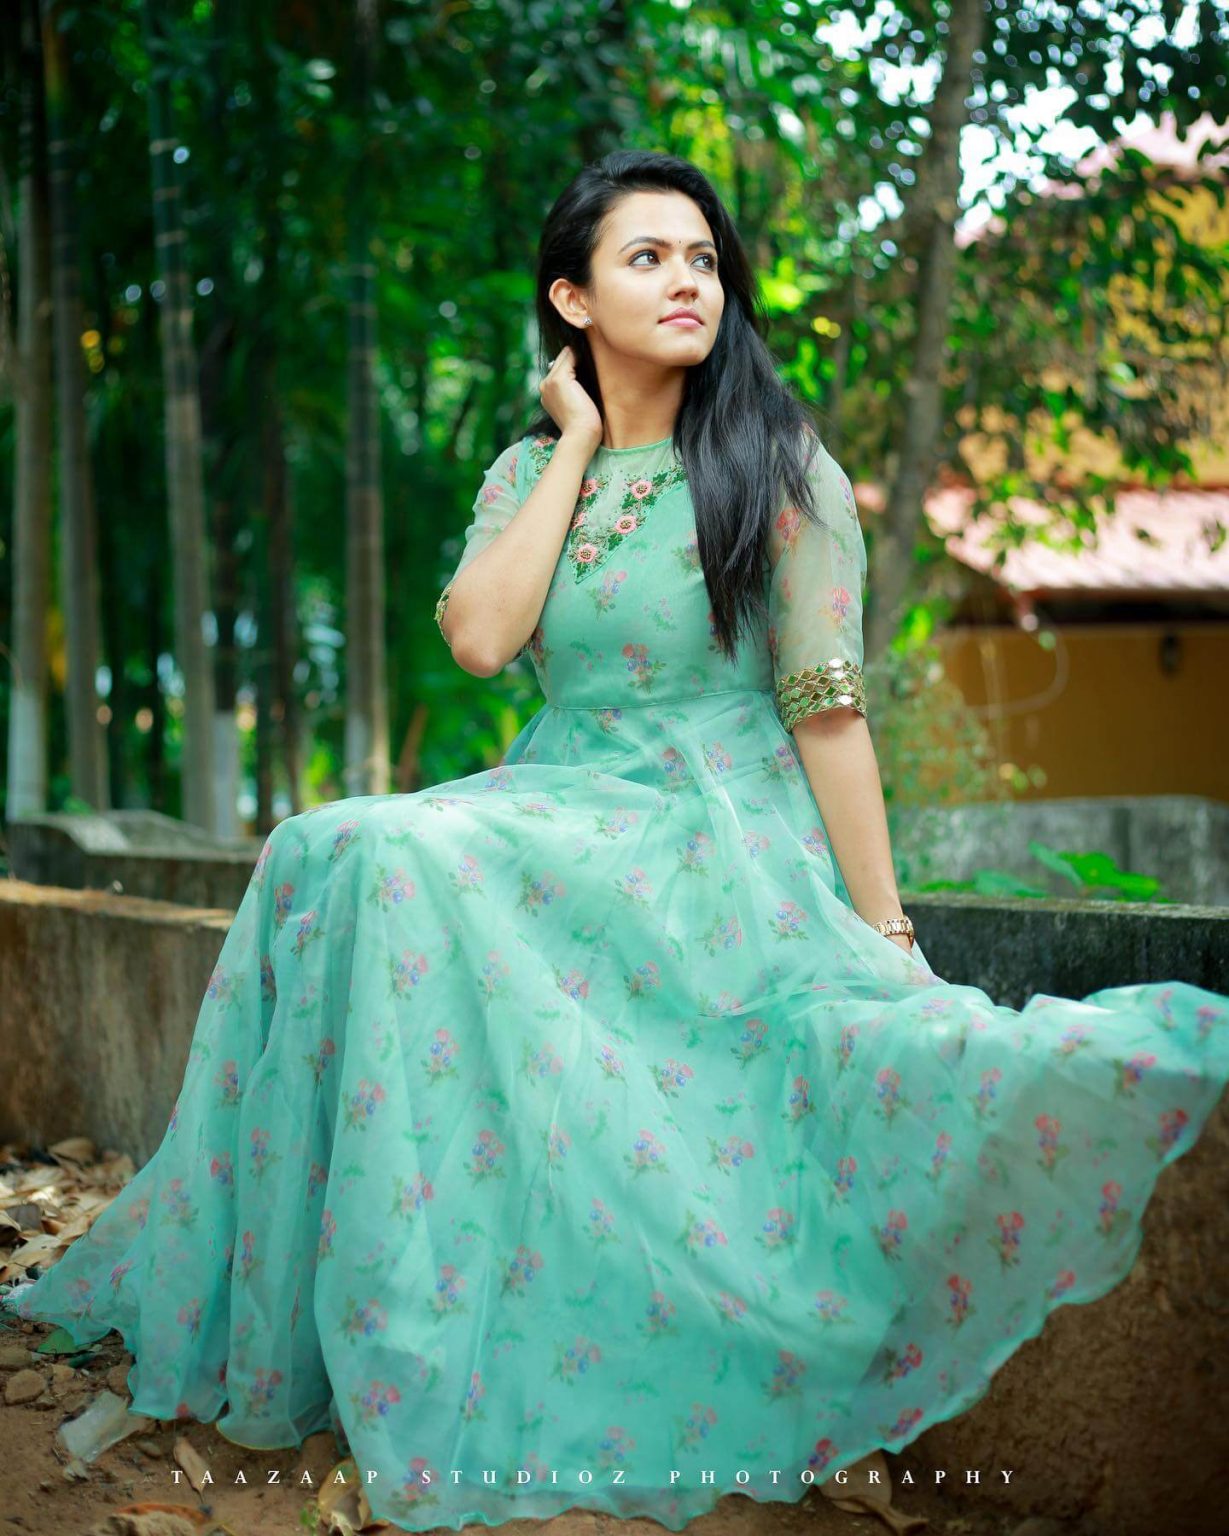 Aparna Das Festive Outfits And Looks - K4 Fashion